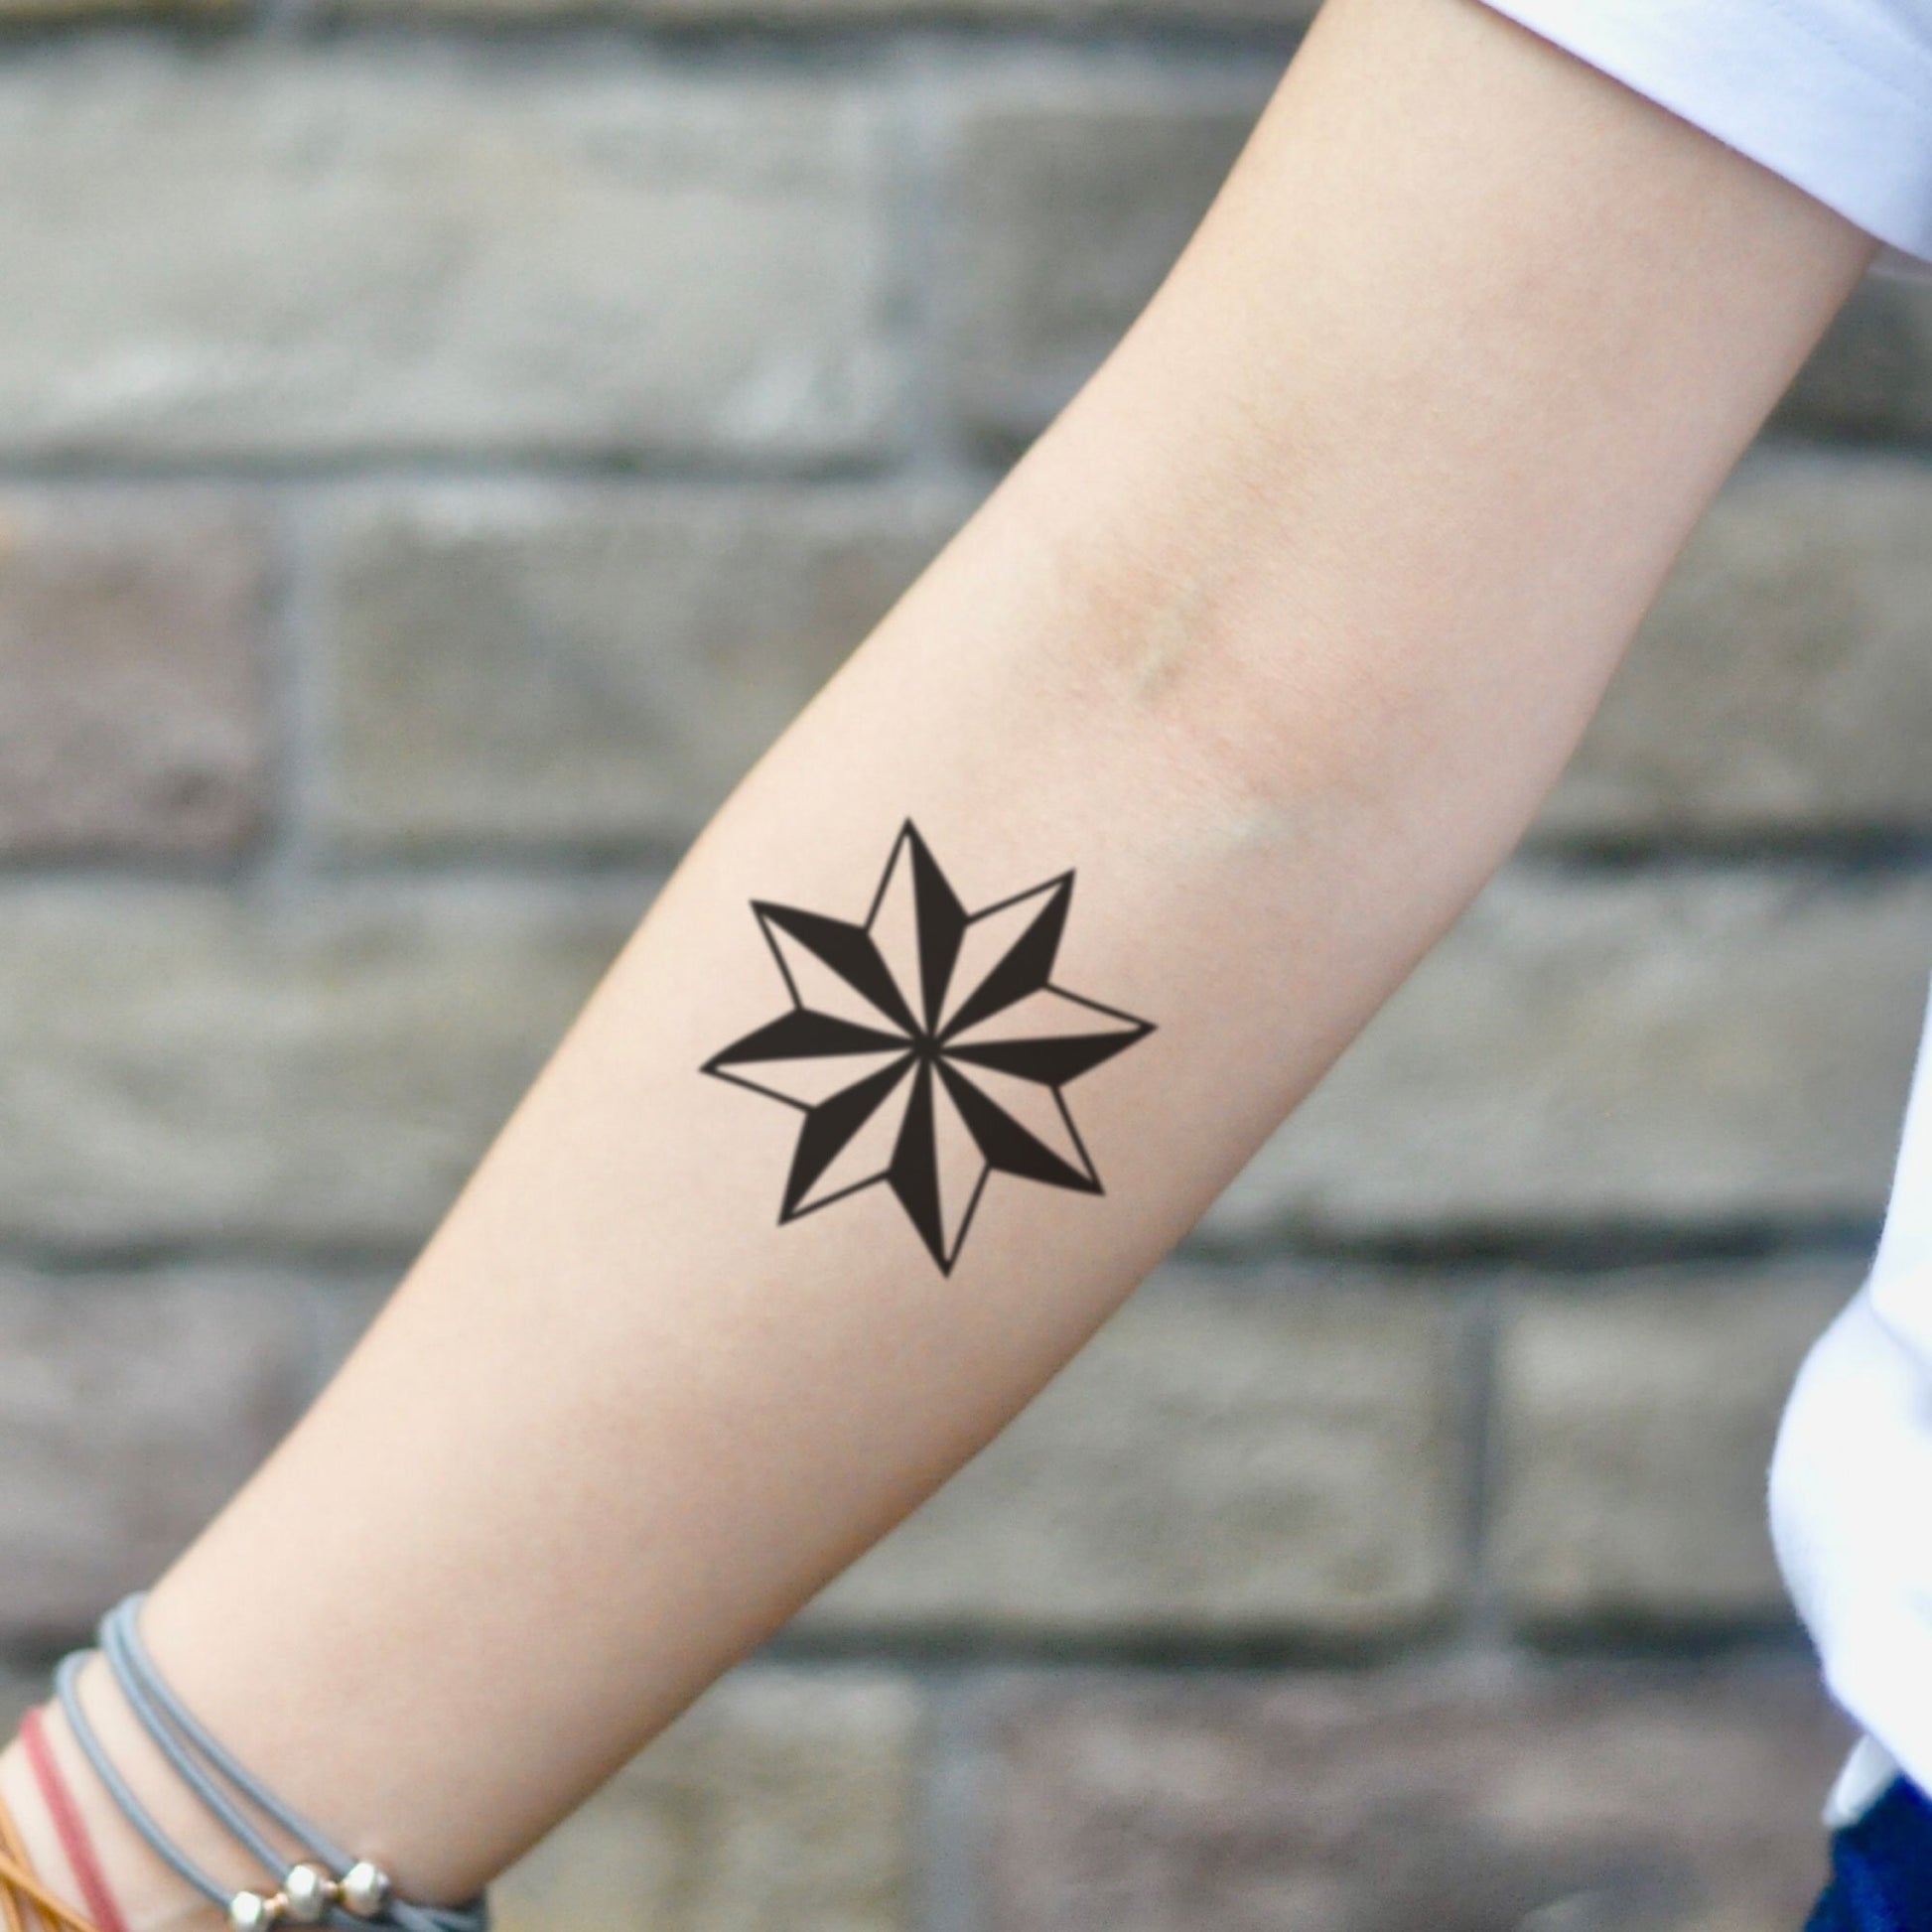 fake small yuri boyka octagon star geometric temporary tattoo sticker design idea on inner arm